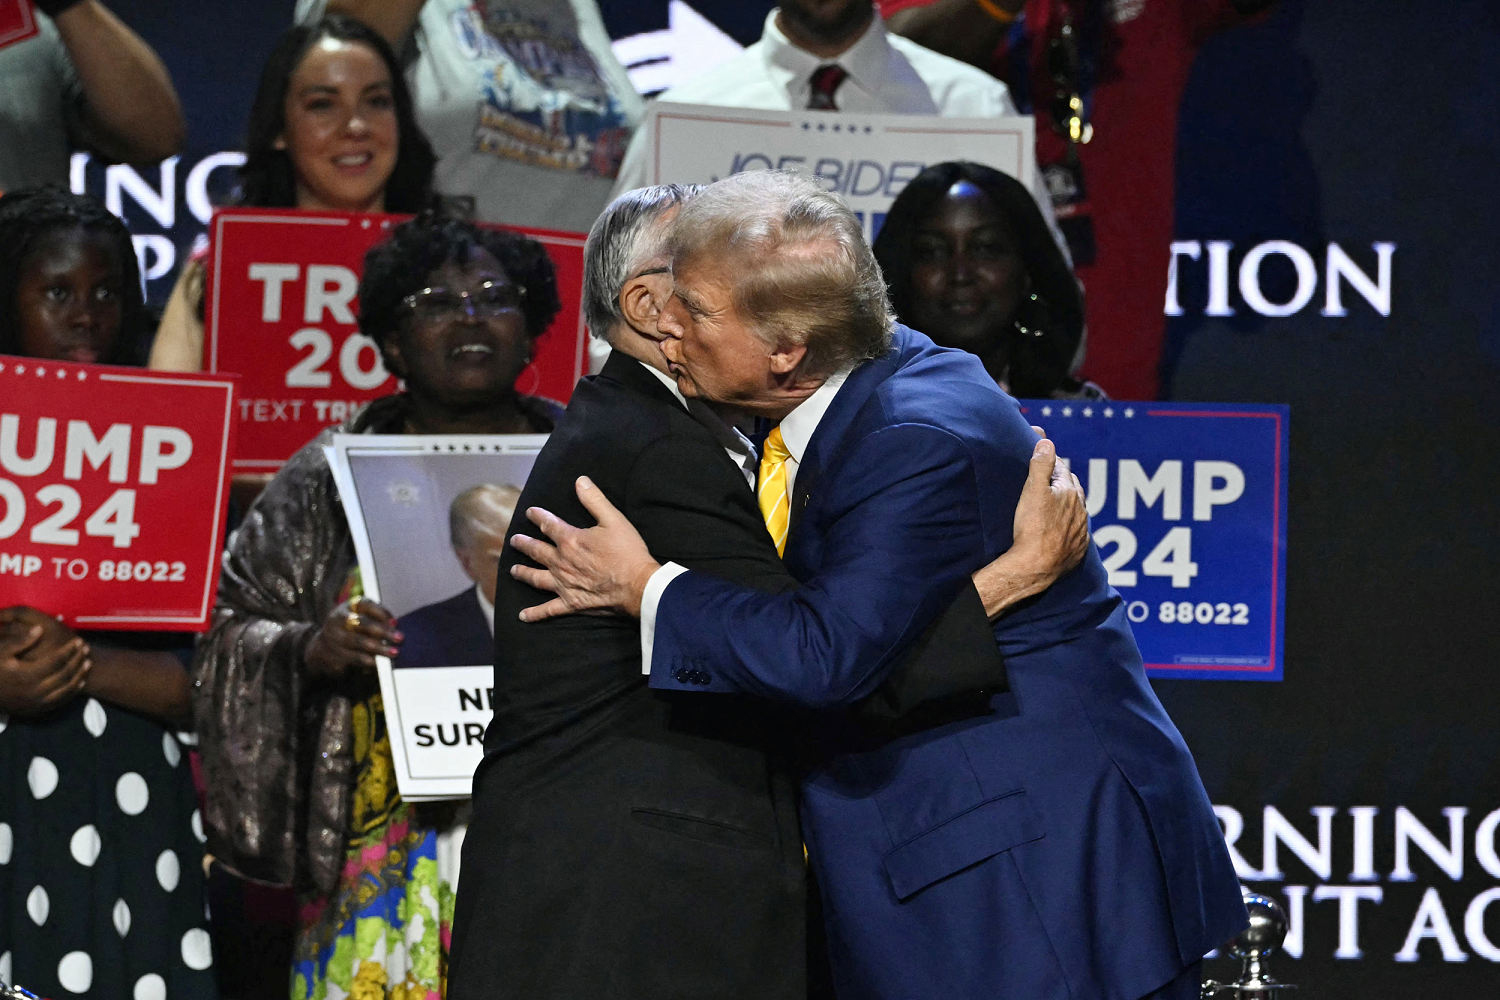 Biden campaign uses Trump-Arpaio 'kiss' in digital ad targeting Latino voters  